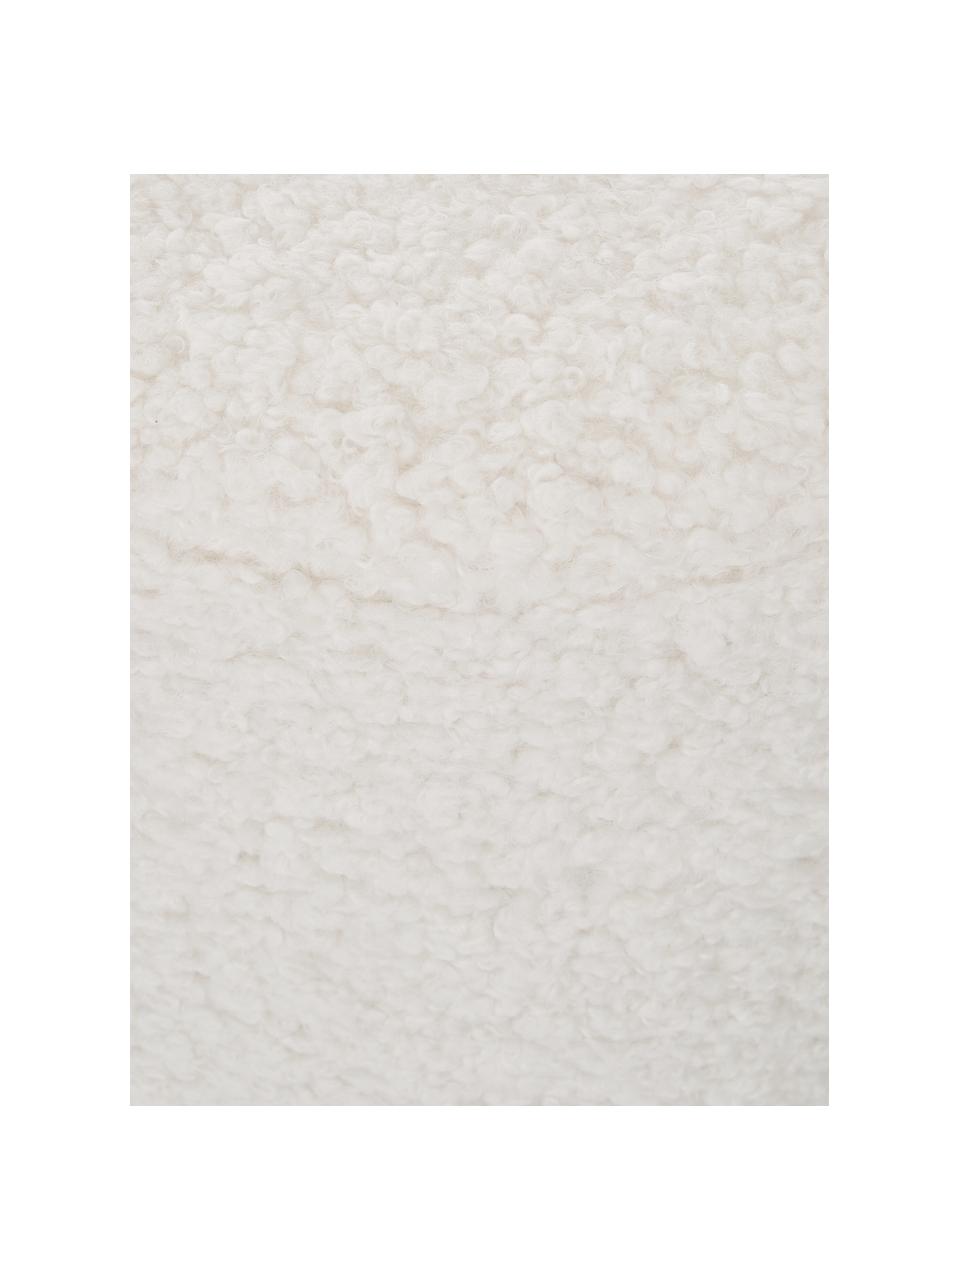 Pouf in tessuto teddy Daisy, Rivestimento: poliestere (teddy) 40.000, Struttura: compensato, Tessuto teddy bianco crema, Ø 38 x Alt. 45 cm